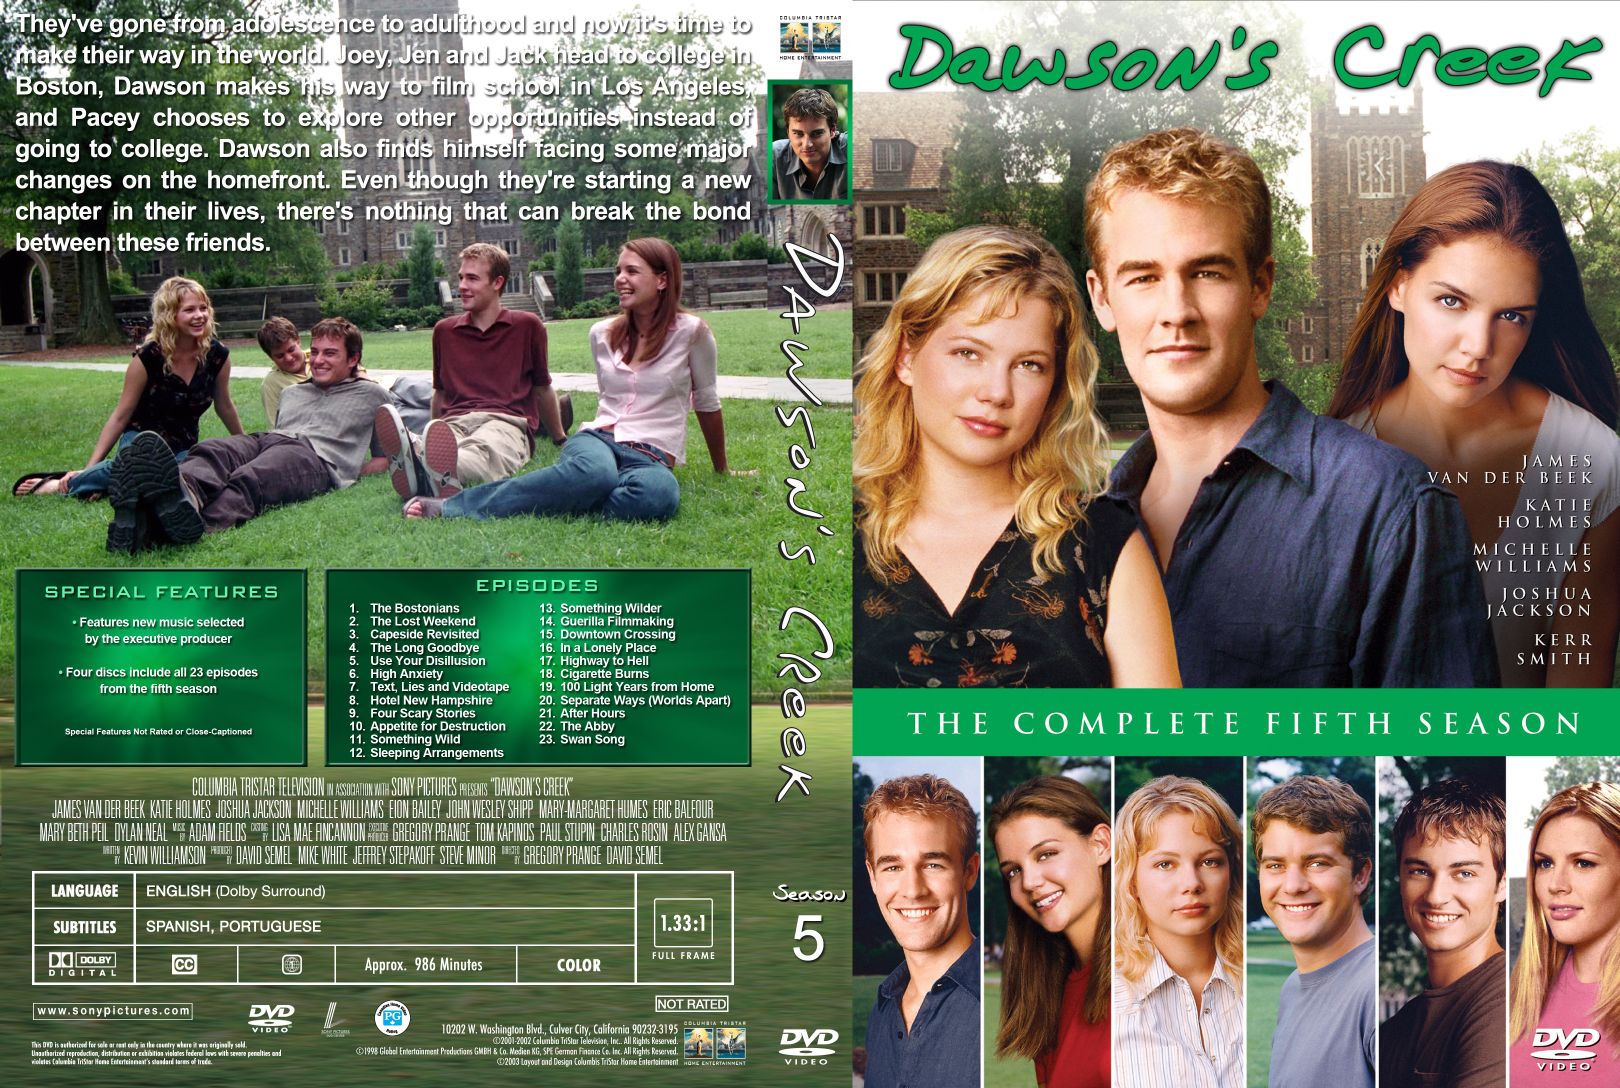 Dawsons Creek Season 5 DVD.